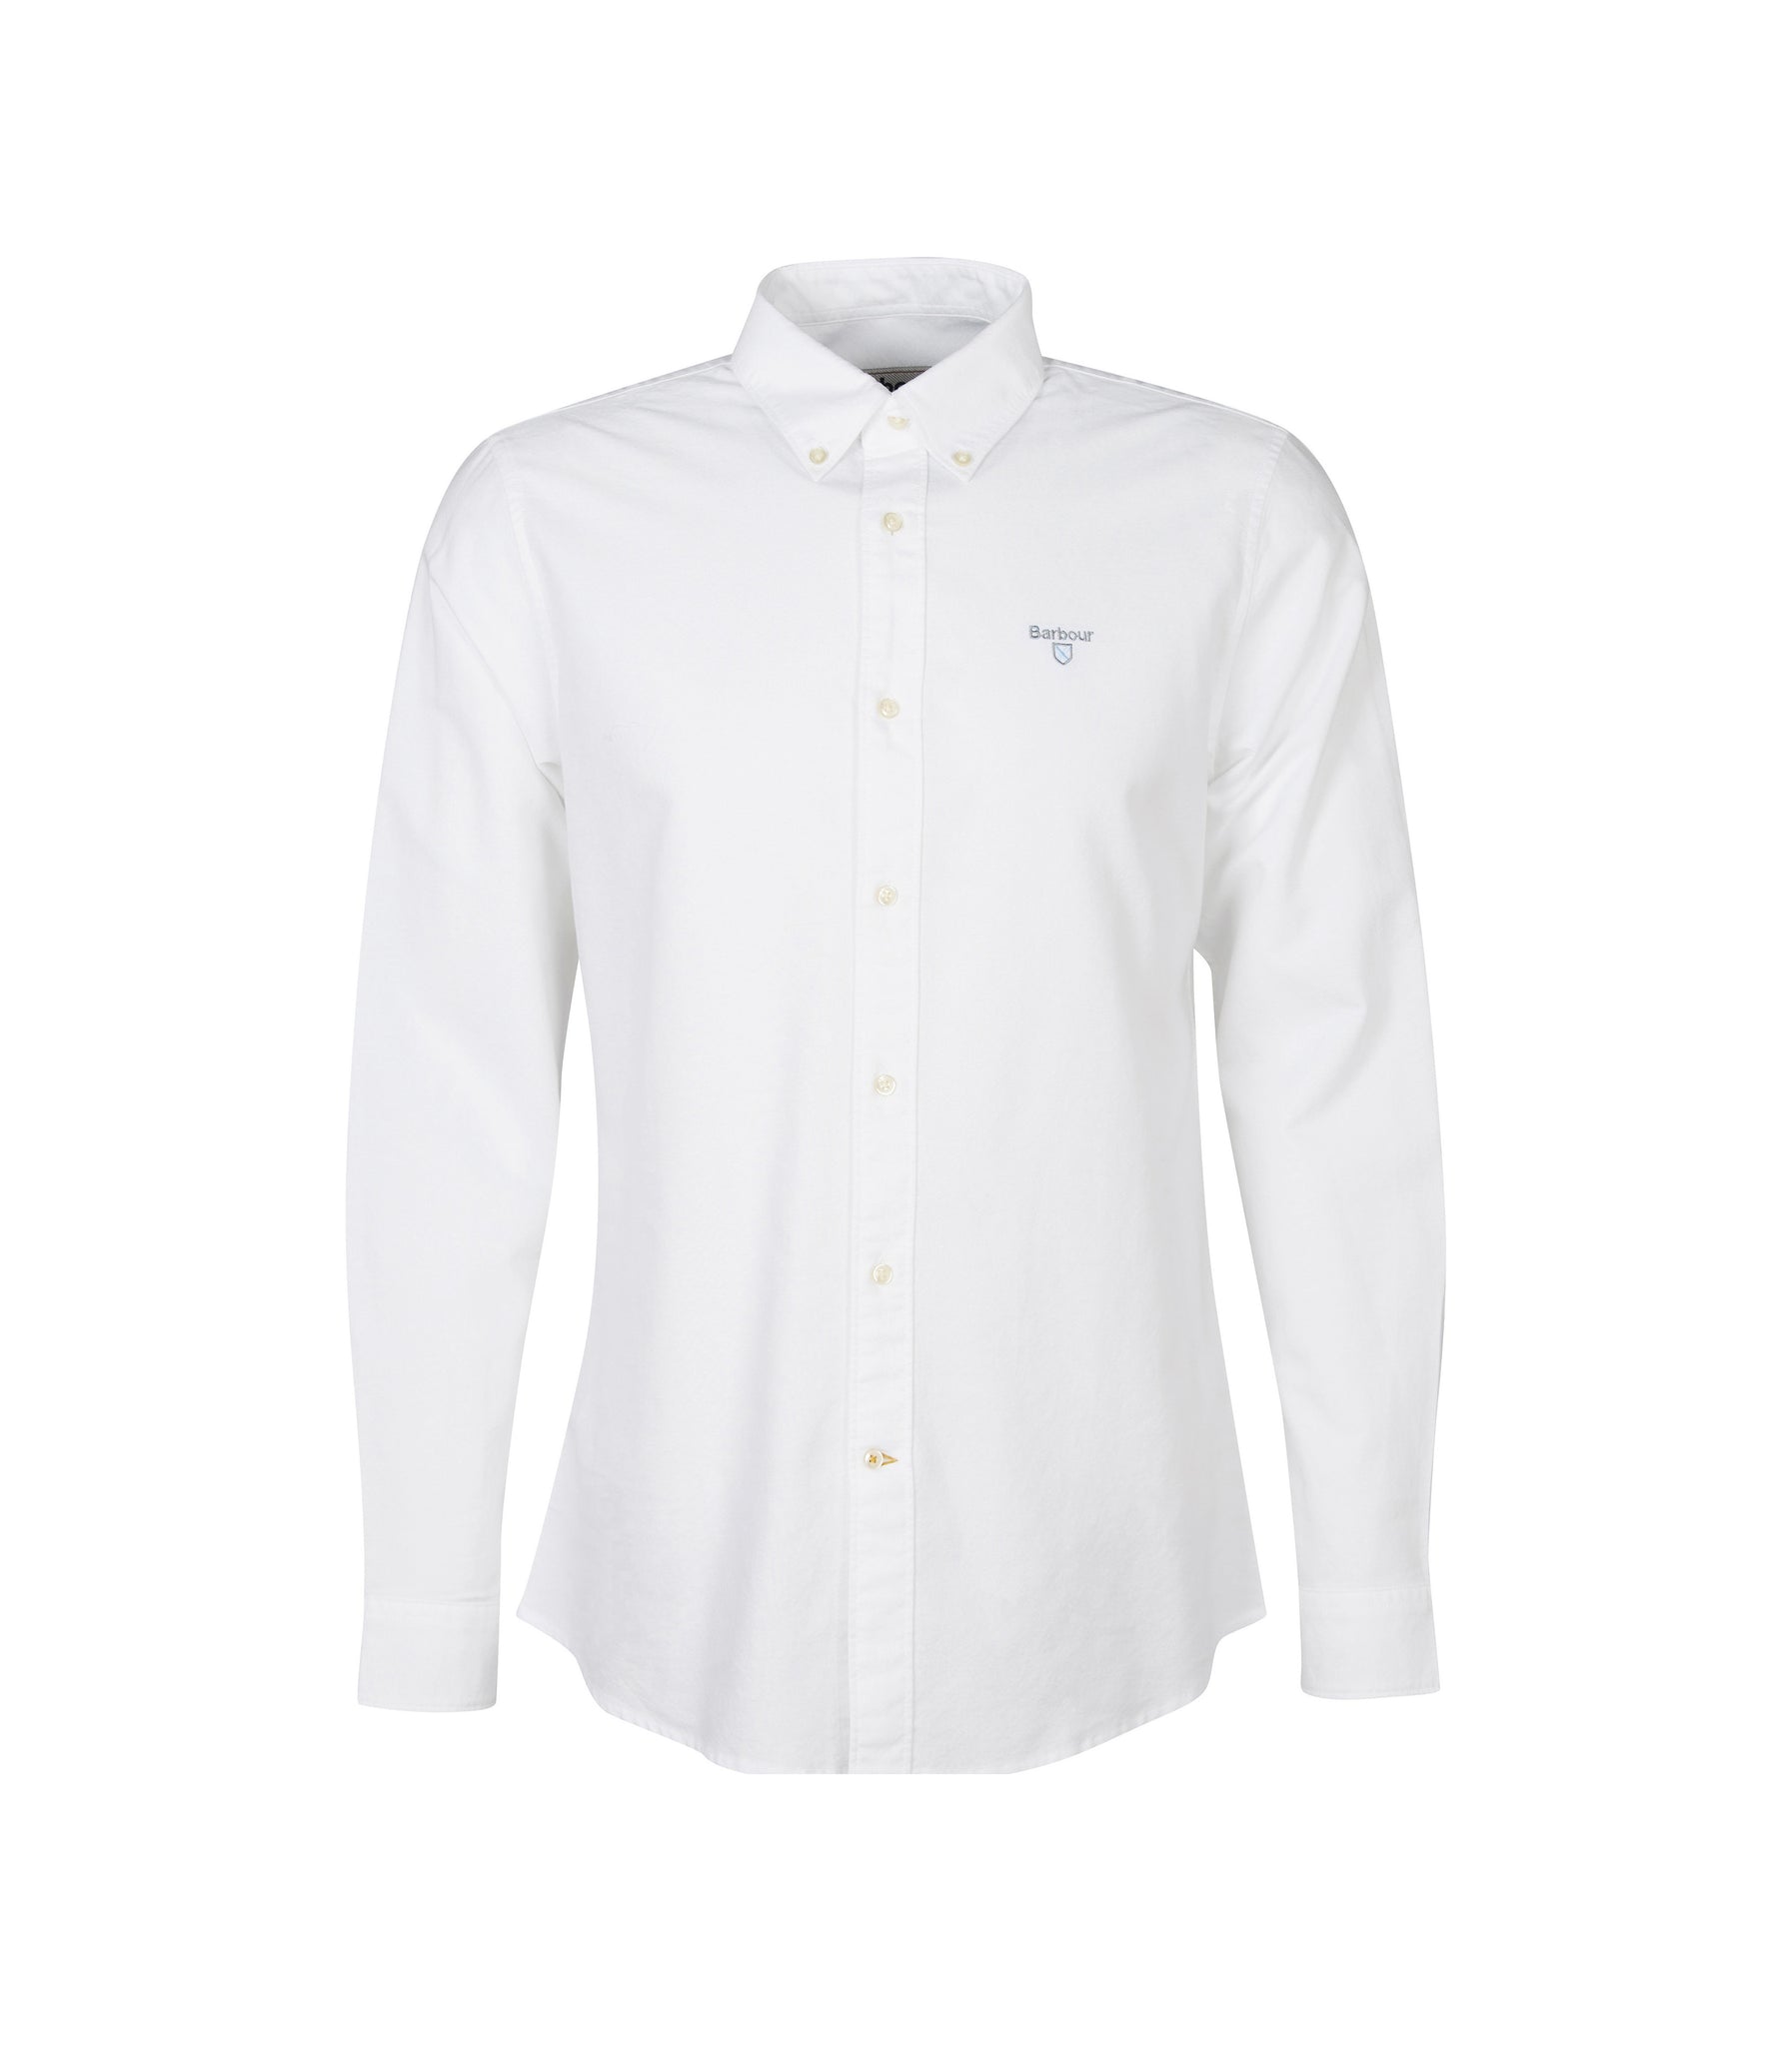 Barbour Oxford White Men's Shirt